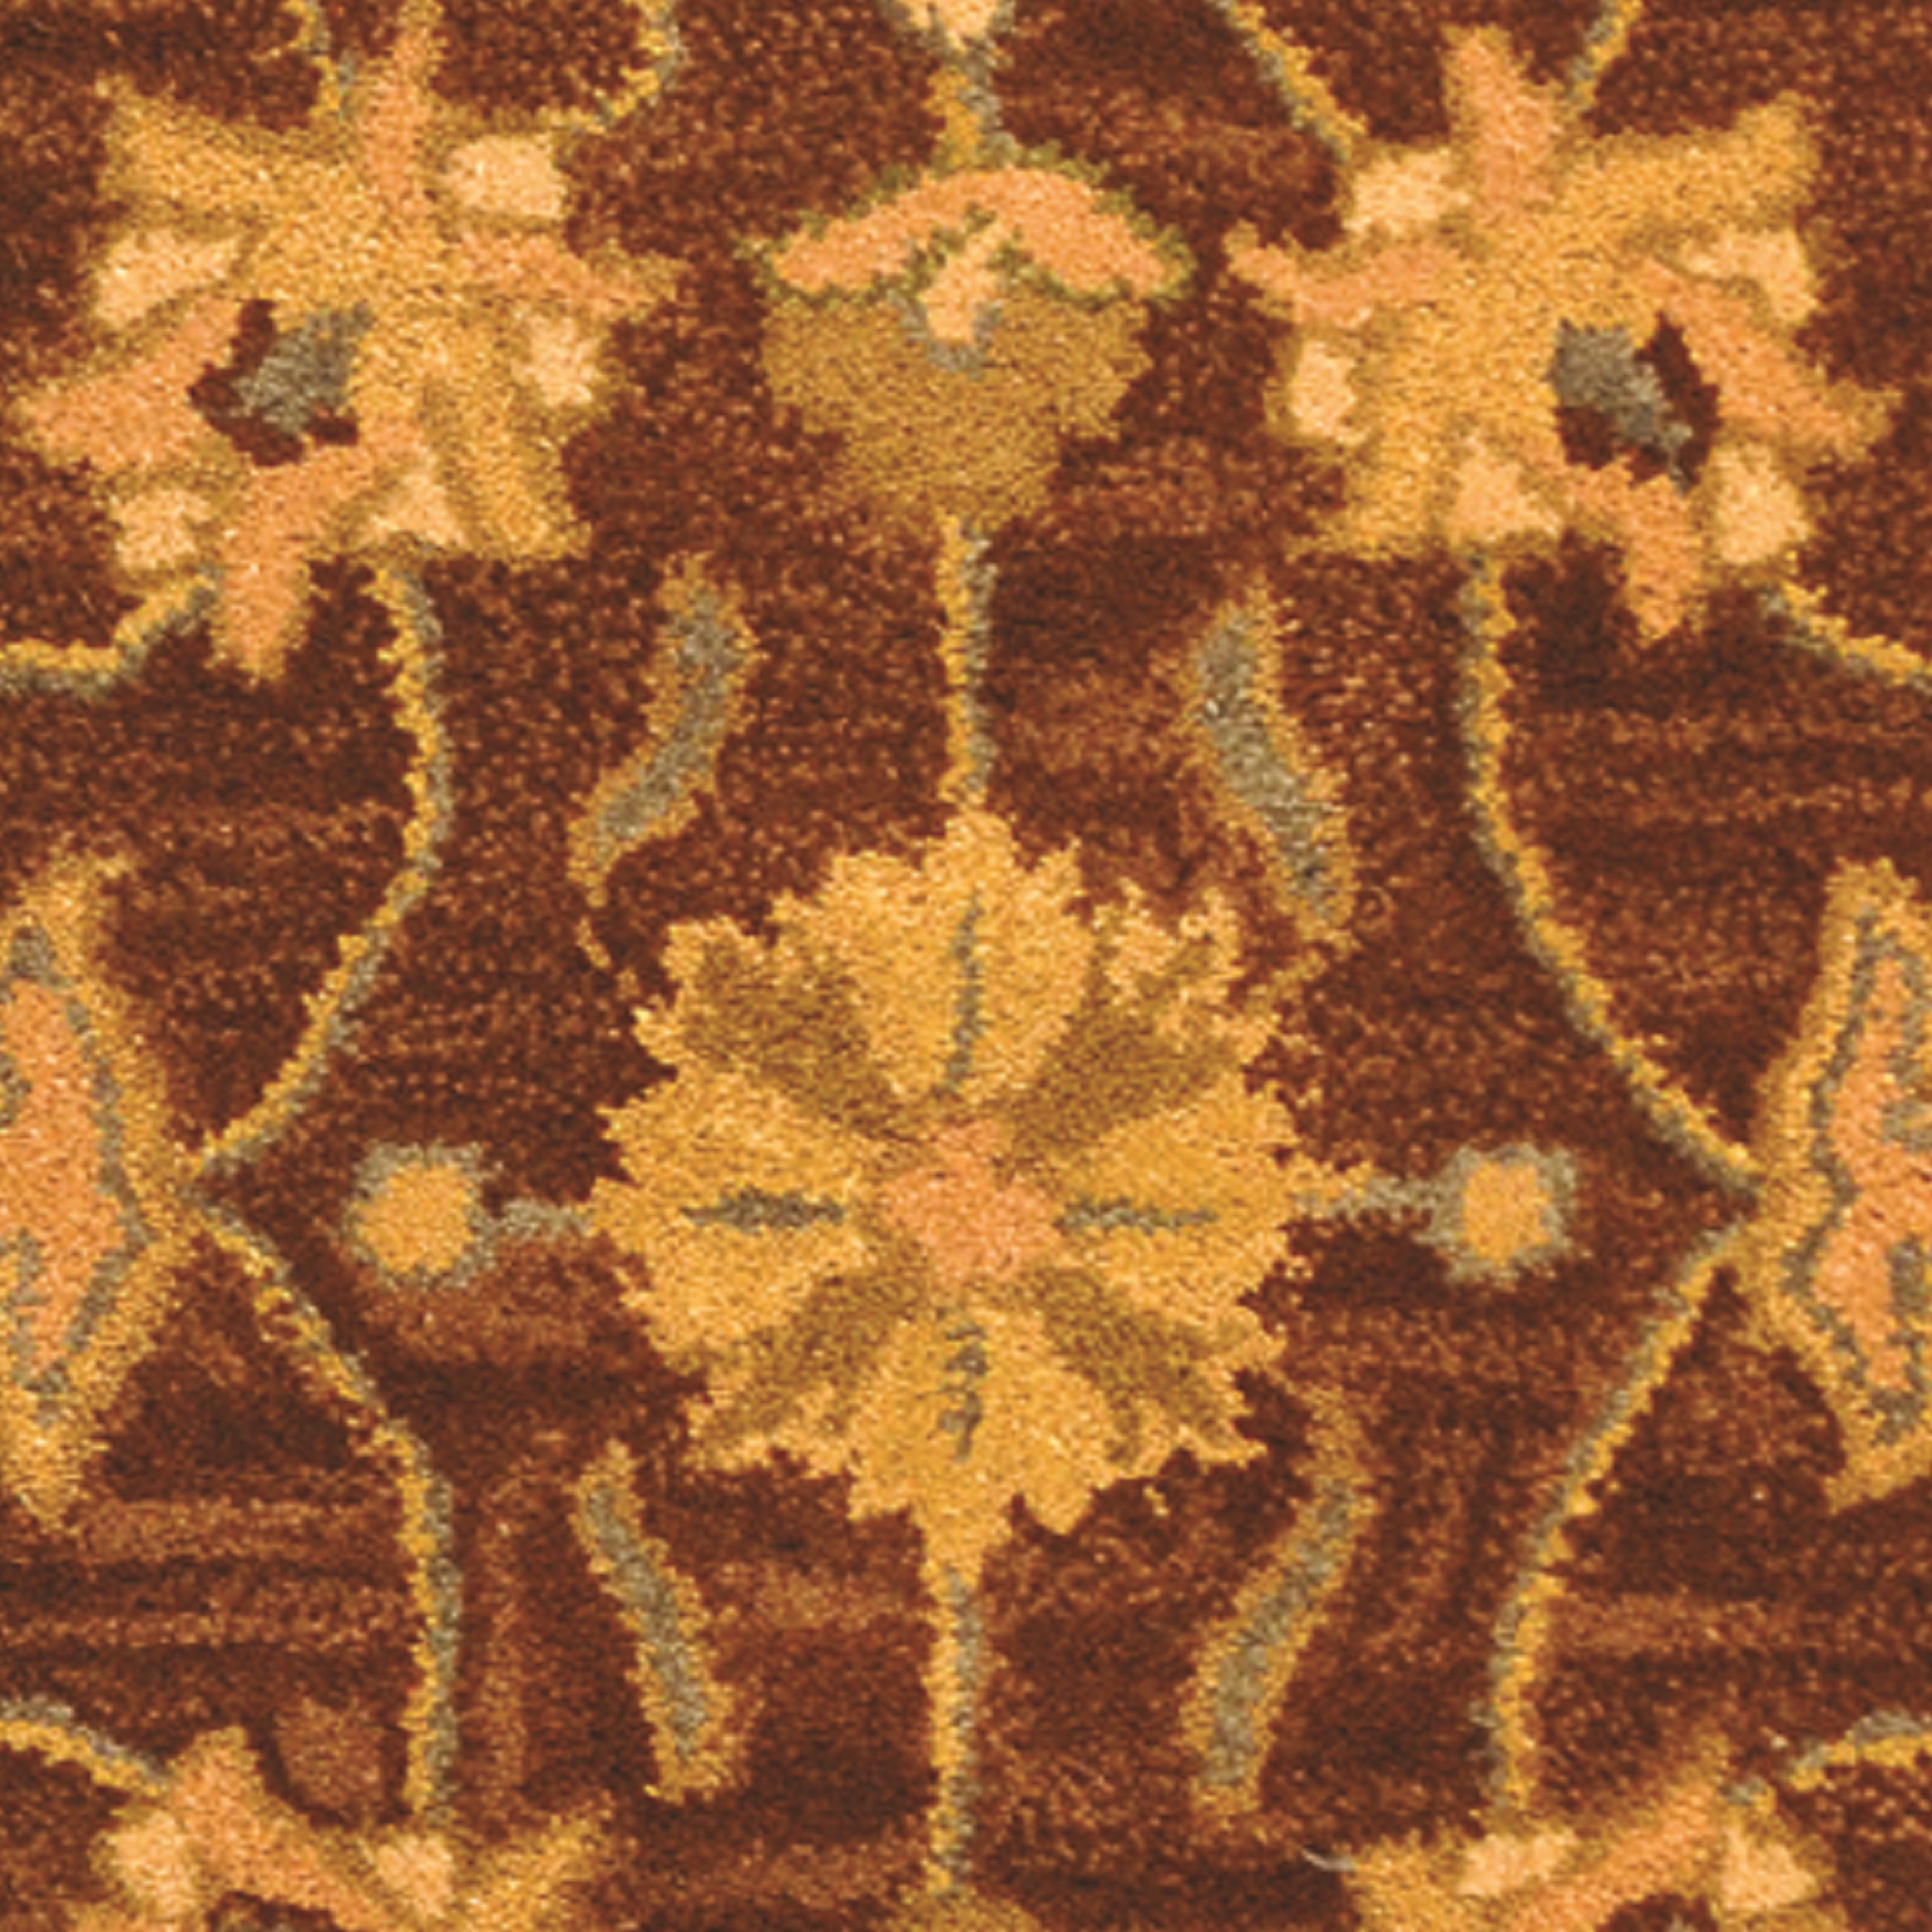 SAFAVIEH Heritage Regis Traditional Wool Area Rug, Brown/Blue, 7'6" x 9'6" Oval - image 3 of 4